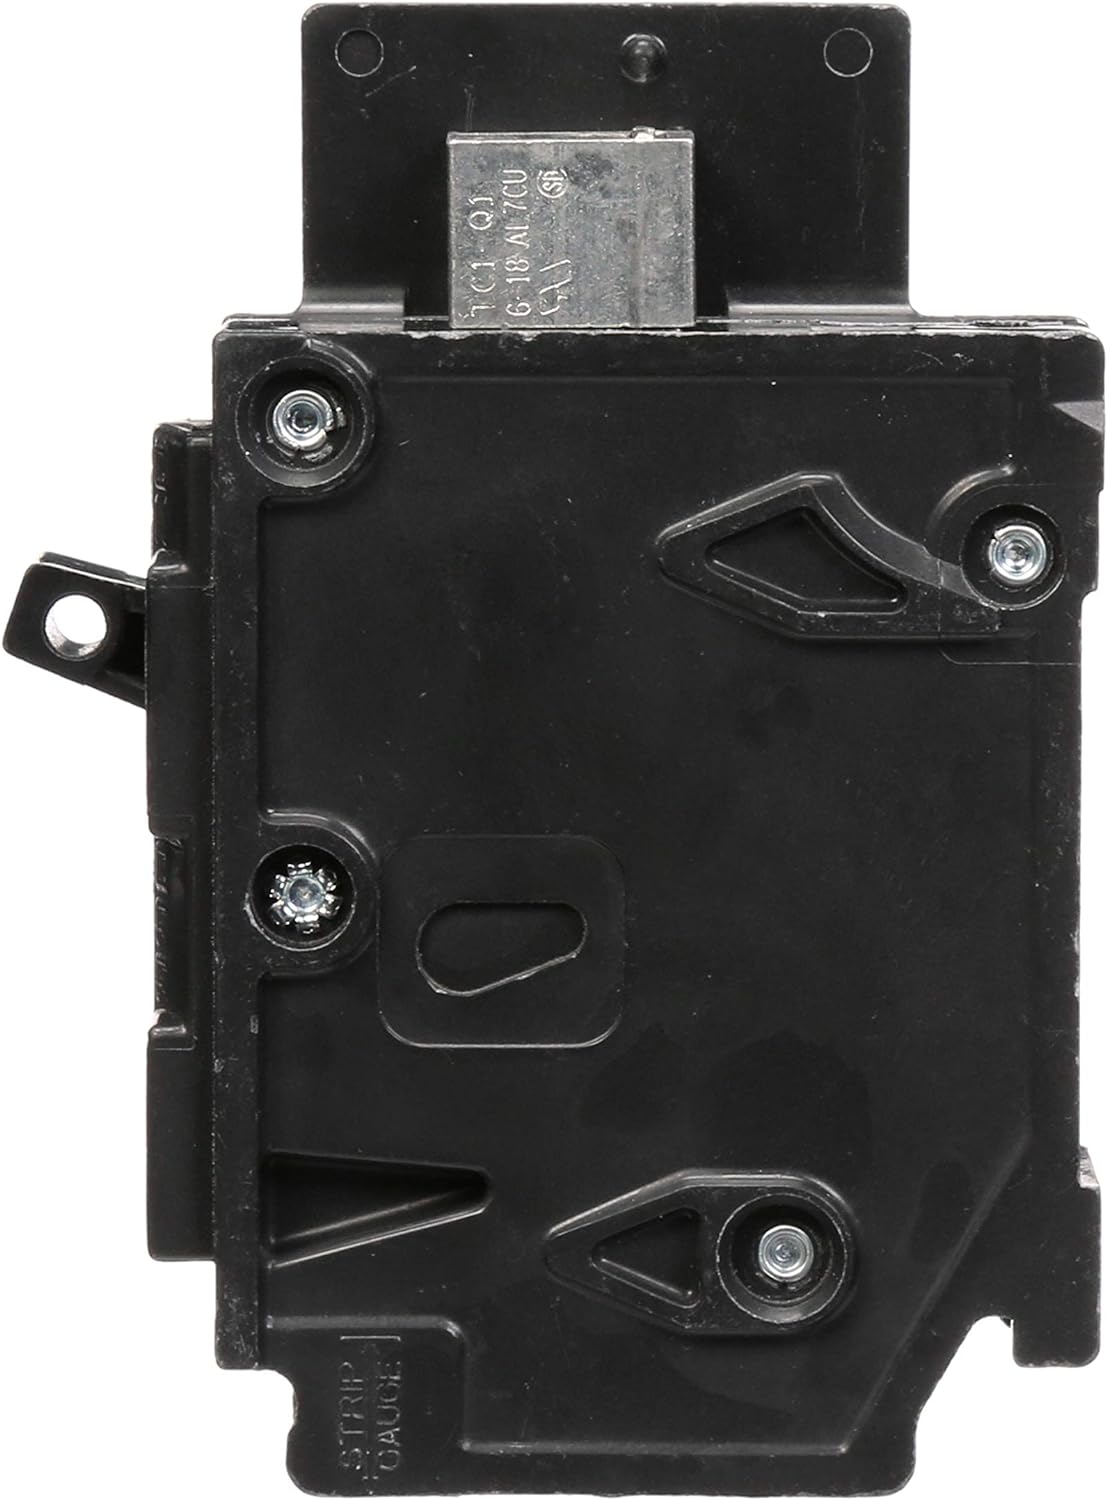 BQ1B040H - Siemens - 40 Amp Molded Case Circuit Breaker